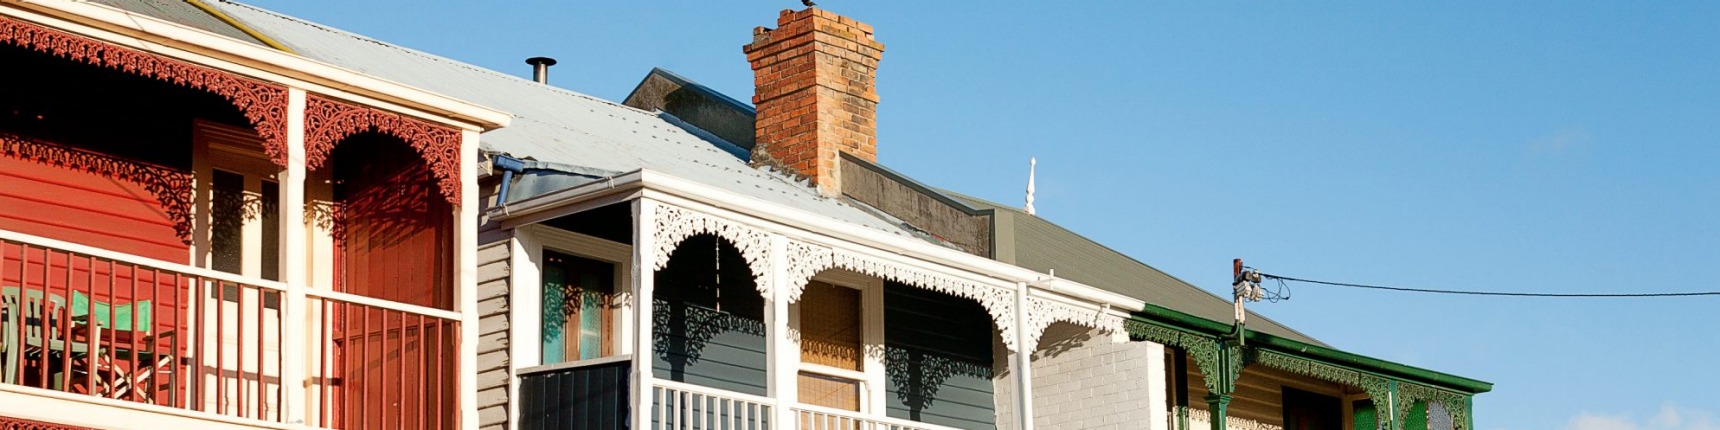 Hobart, historic houses